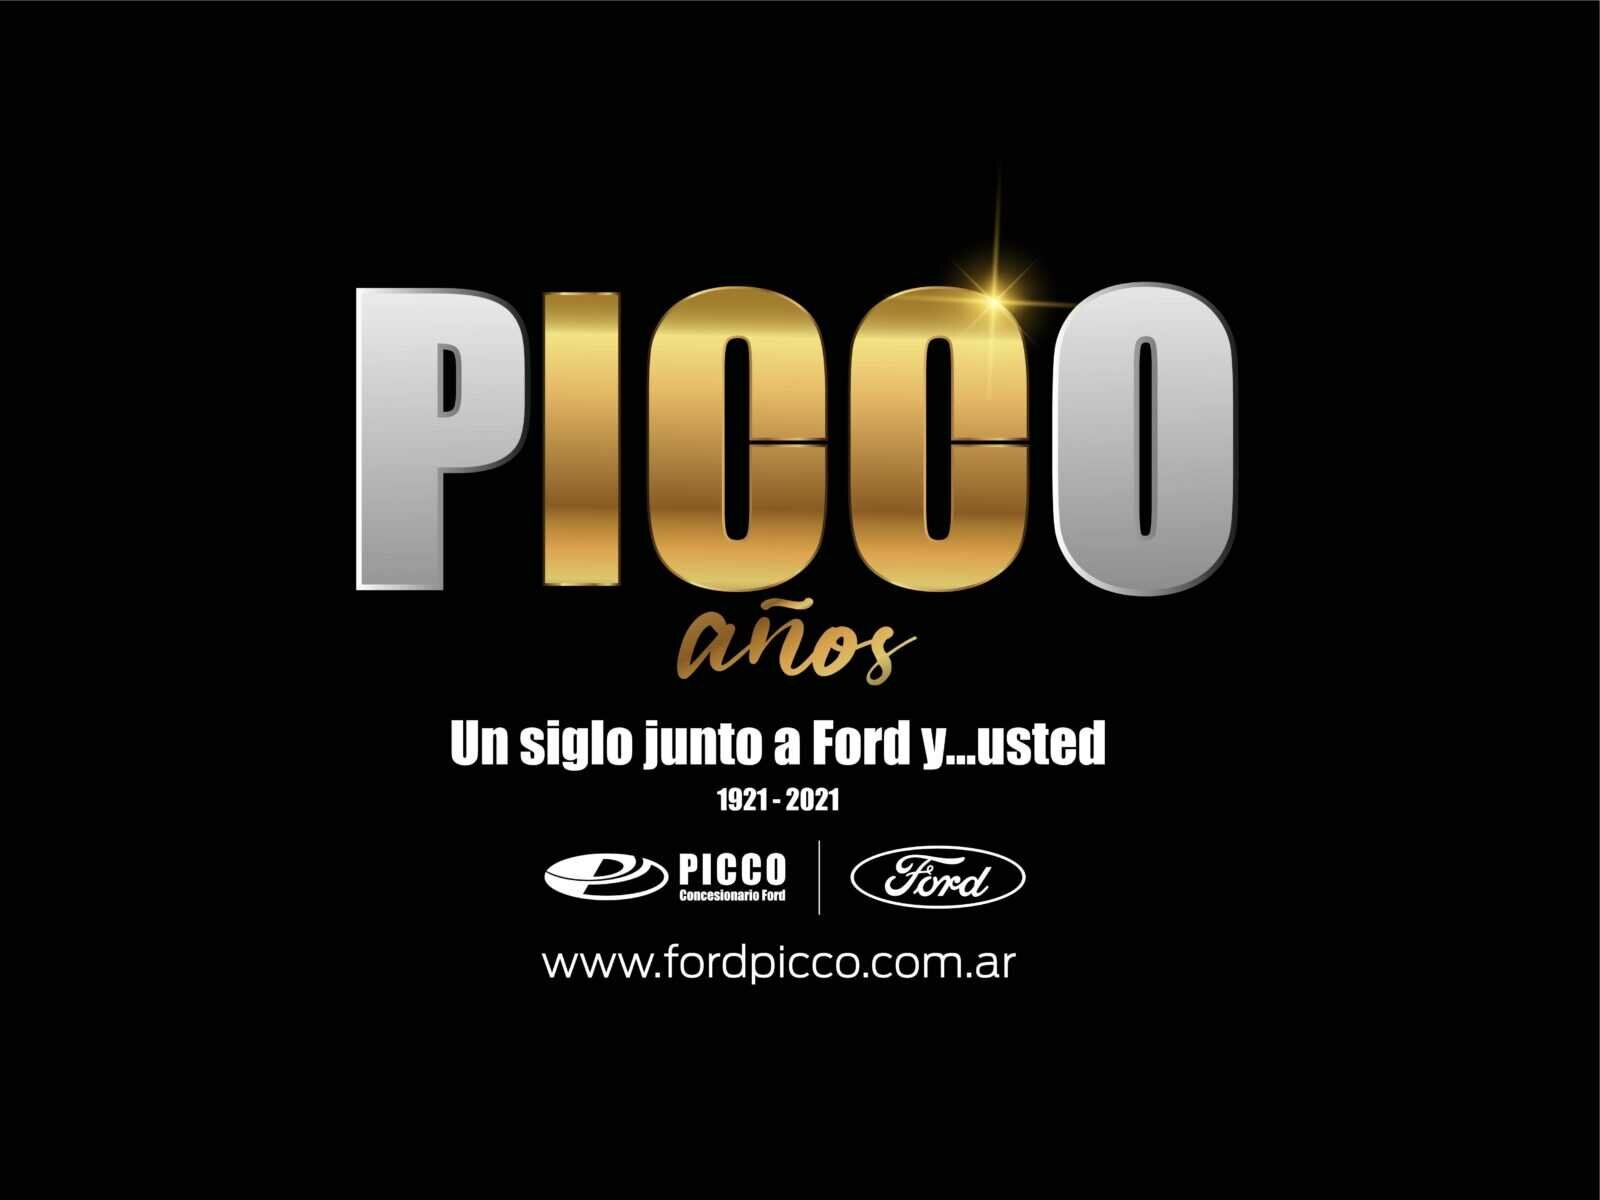 Ford Picco 100 años